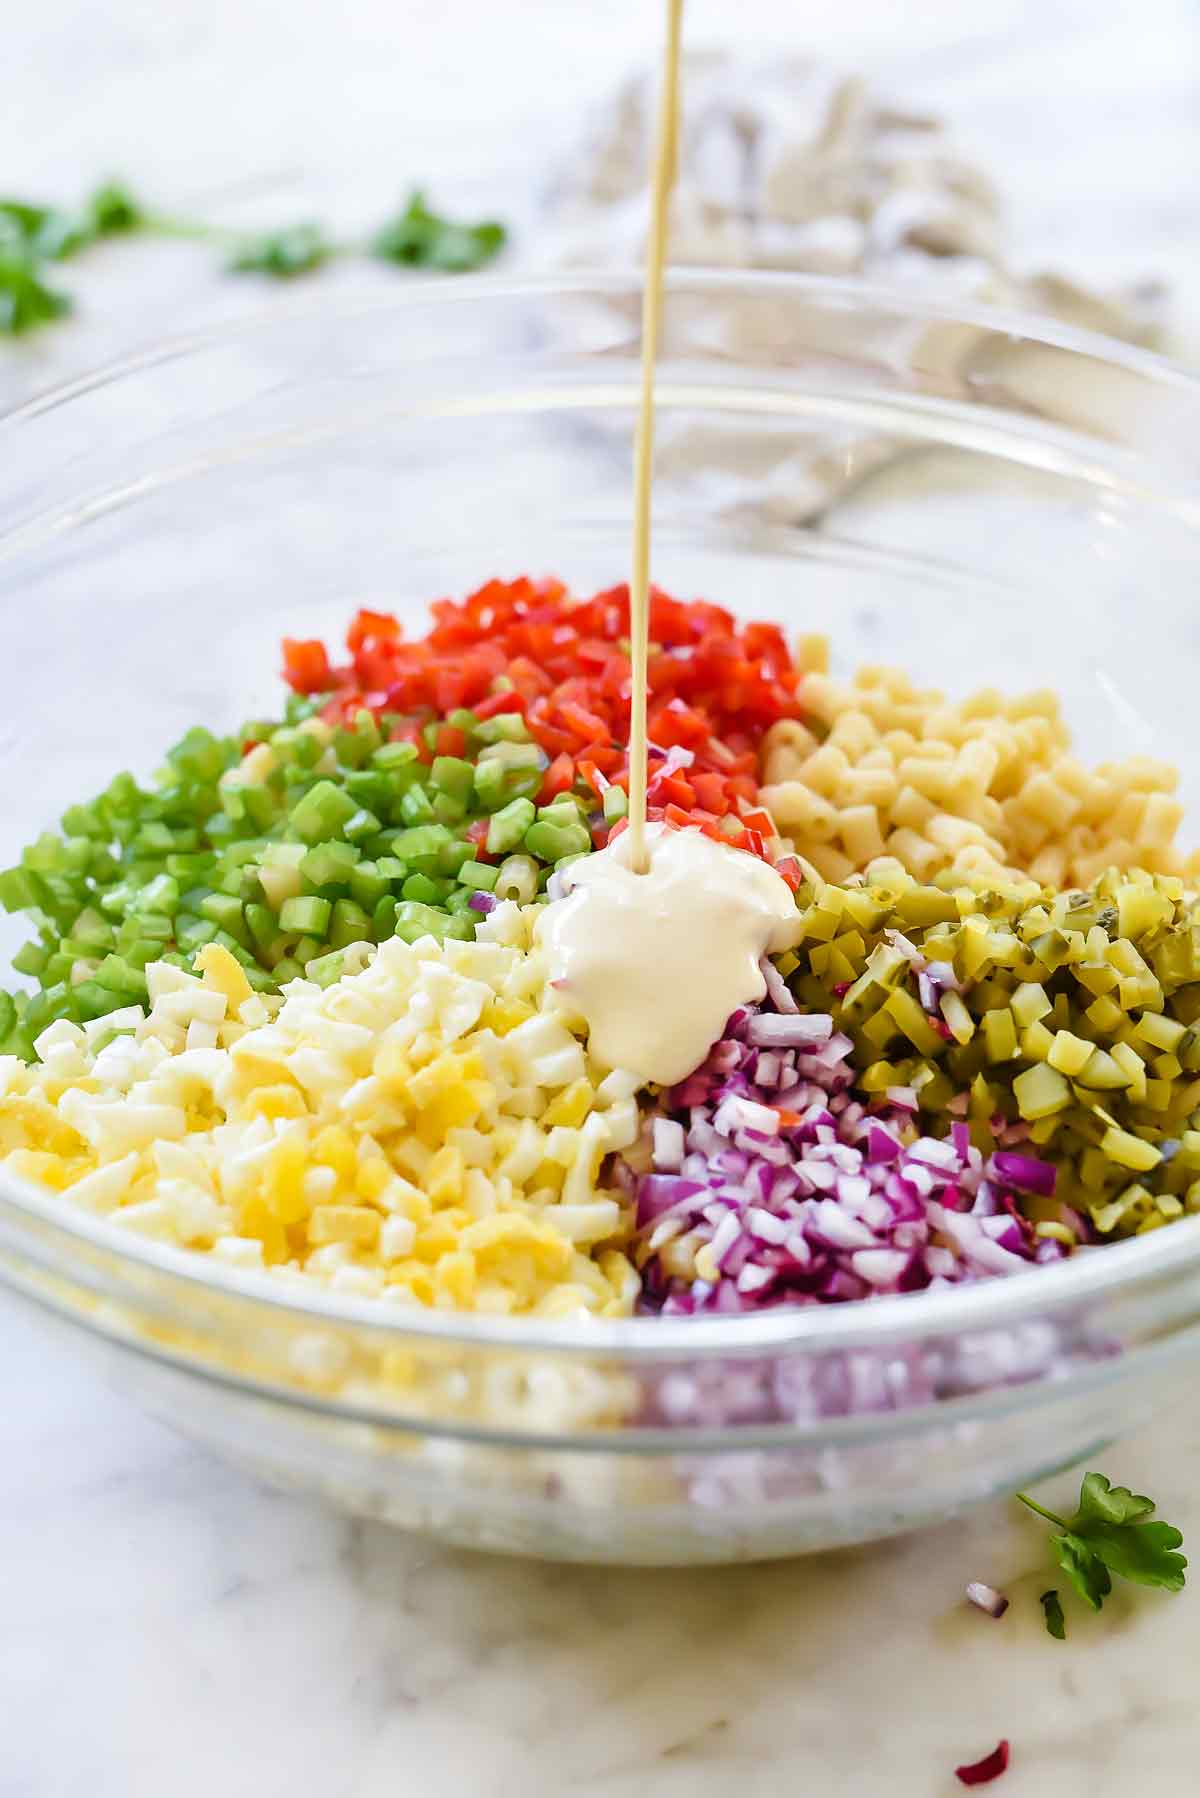 homemade pasta salad dressing with mayo